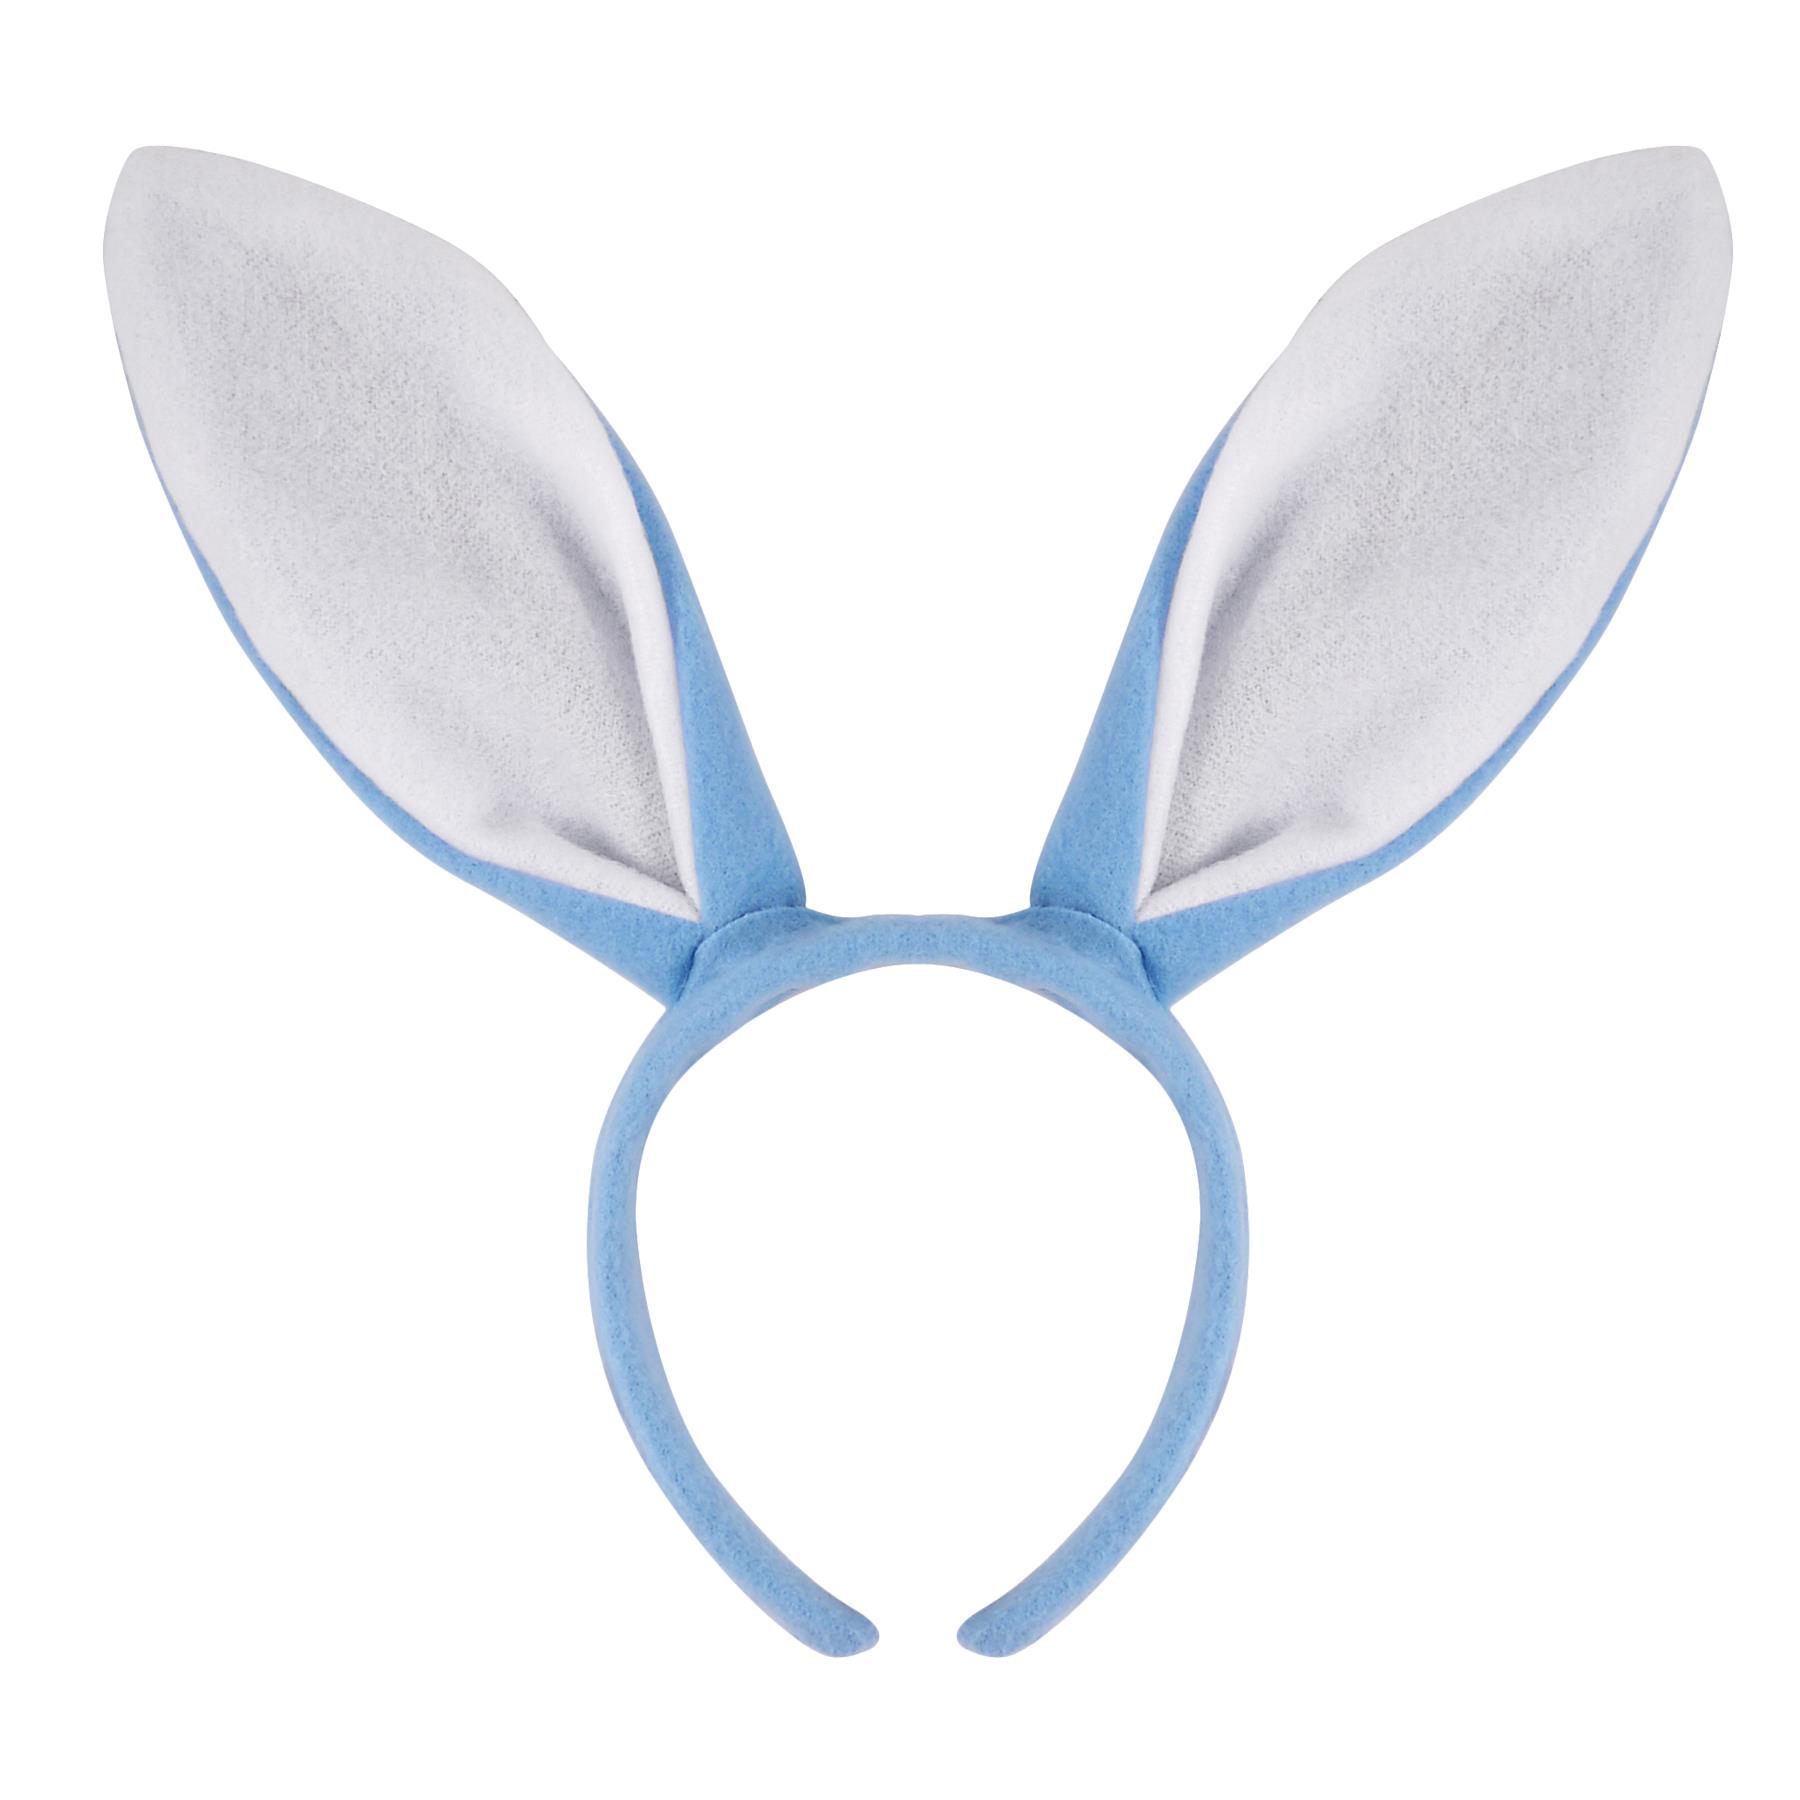 Easter Novelty Dress up - White / Blue Bunny Ears Headband